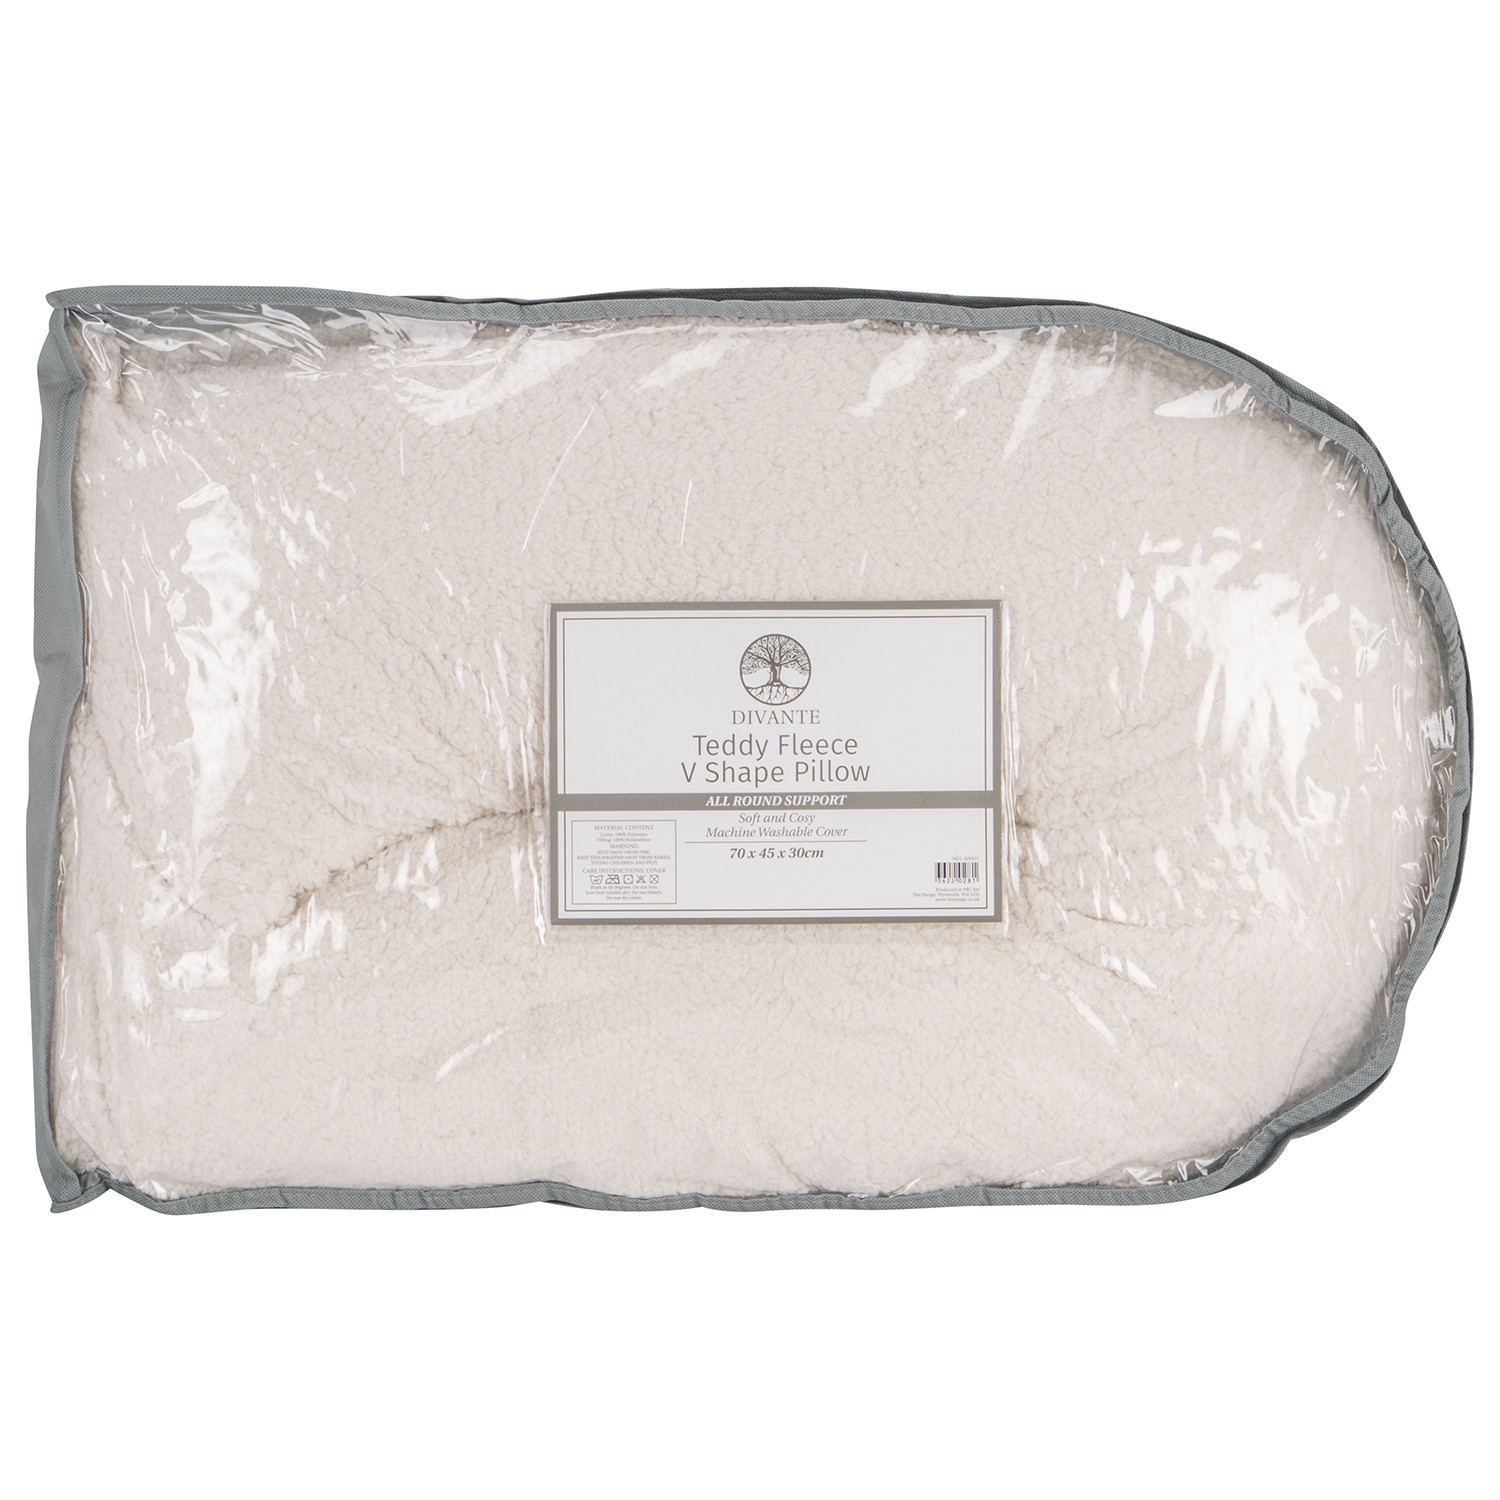 Divante Cream Teddy Fleece V Shape Pillow Image 1